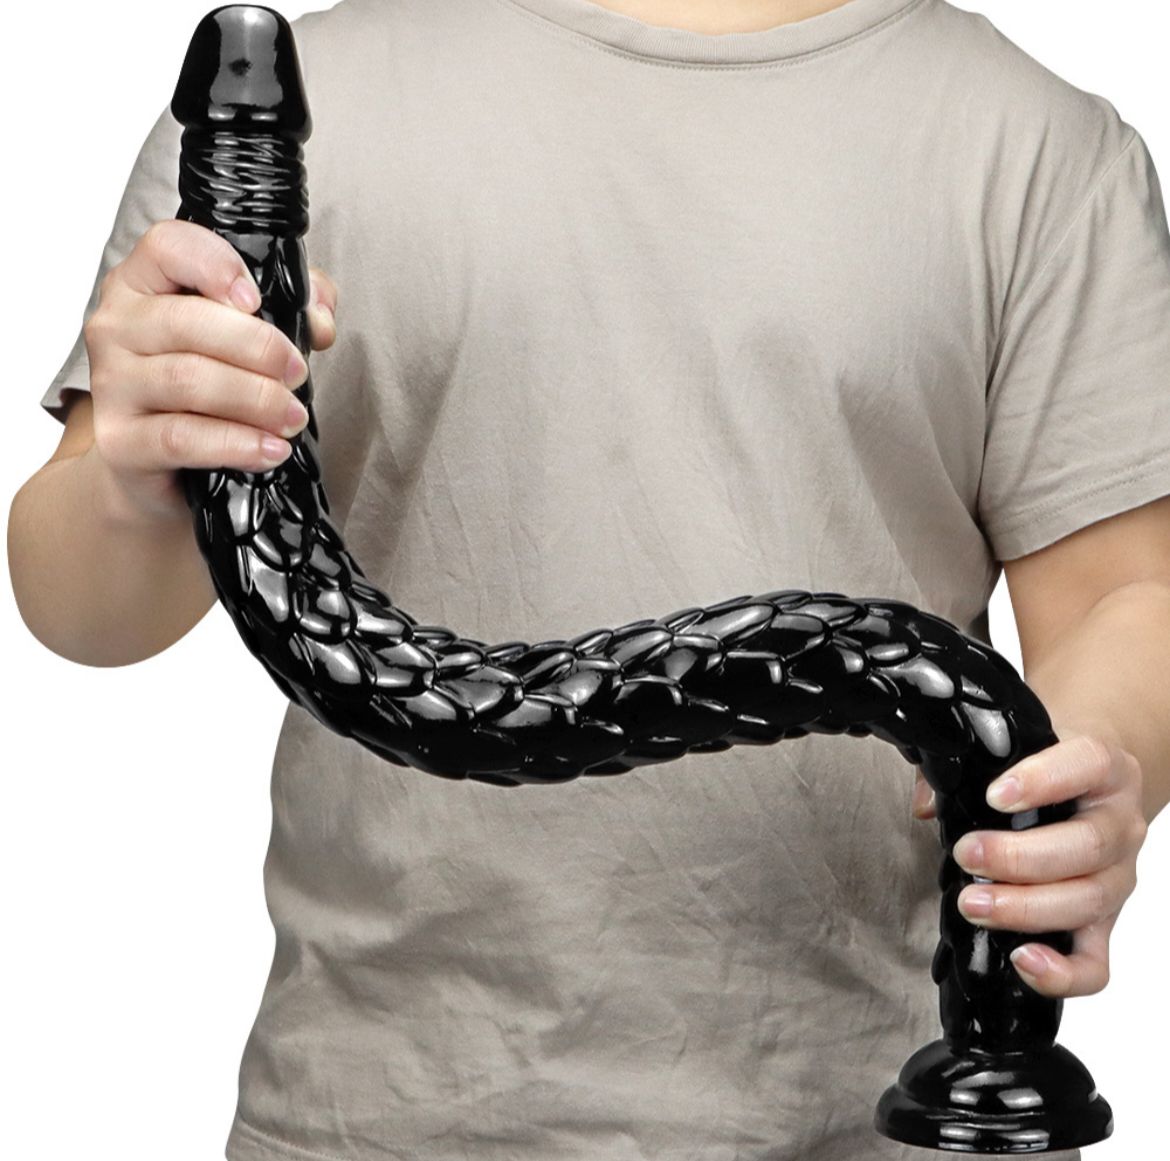 Long and soft dildo, a real anaconda snake. A 62 cm long dildo with a strong suction plug.